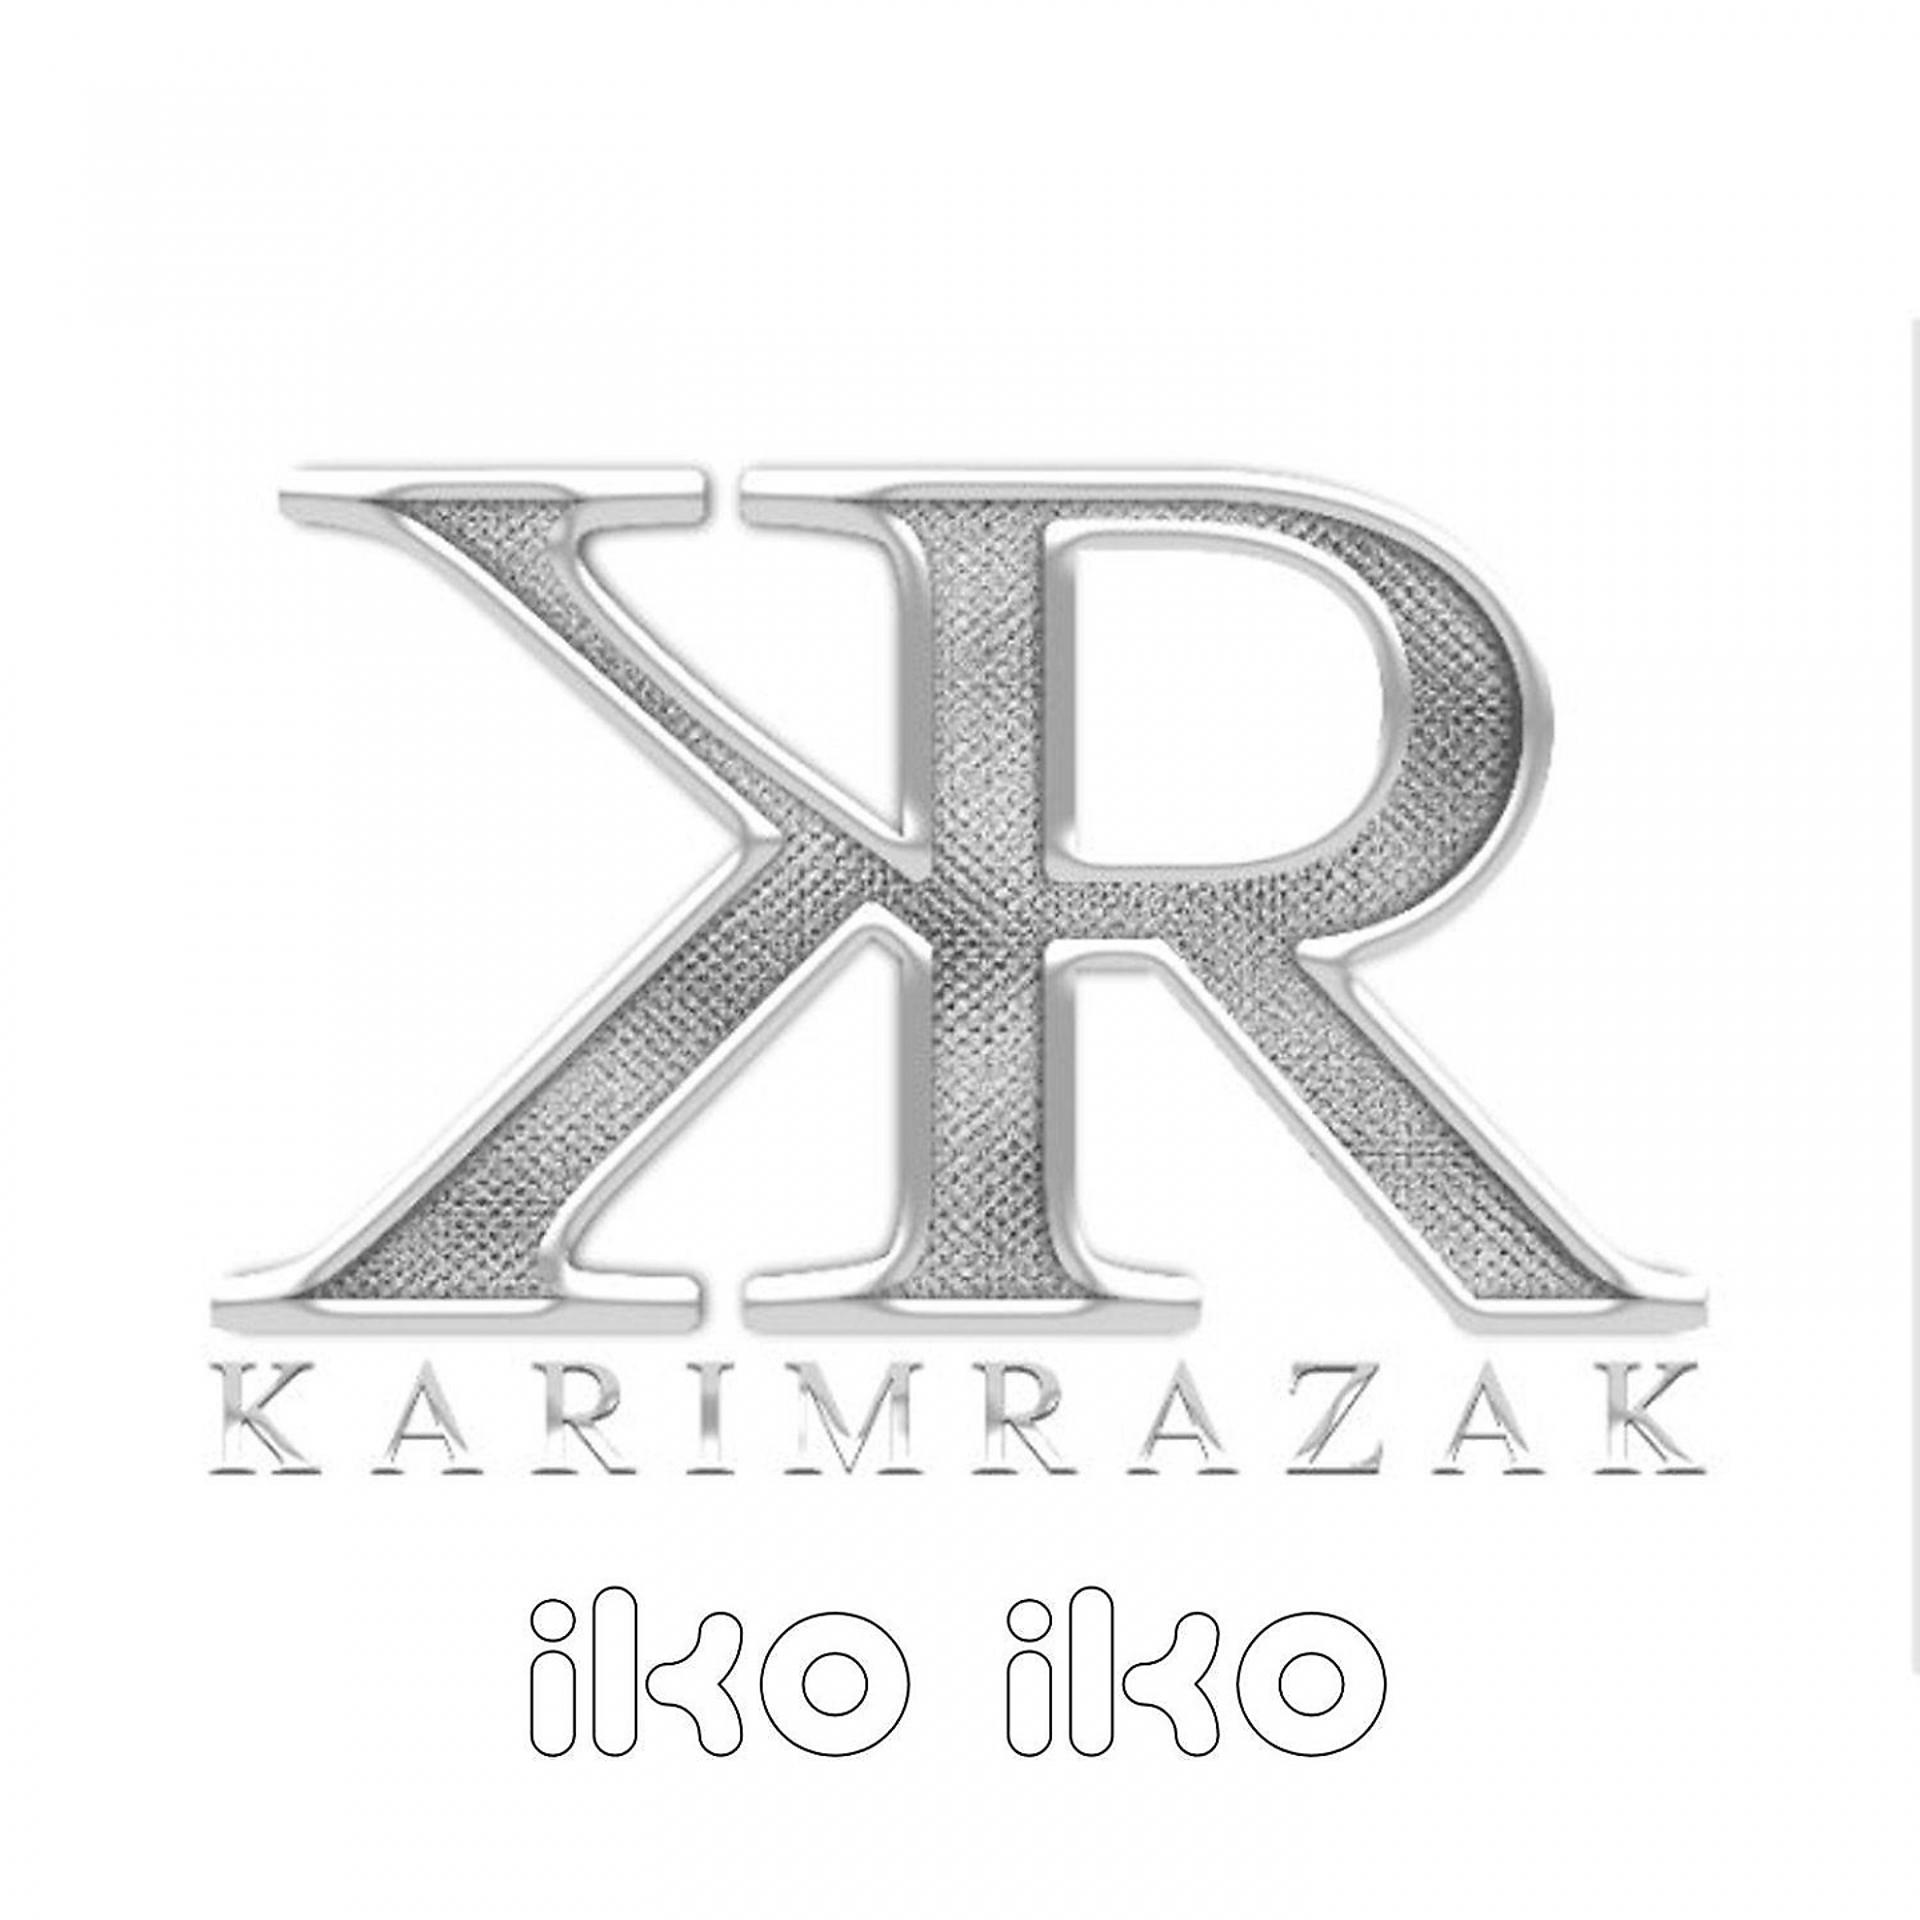 Постер альбома Iko Iko